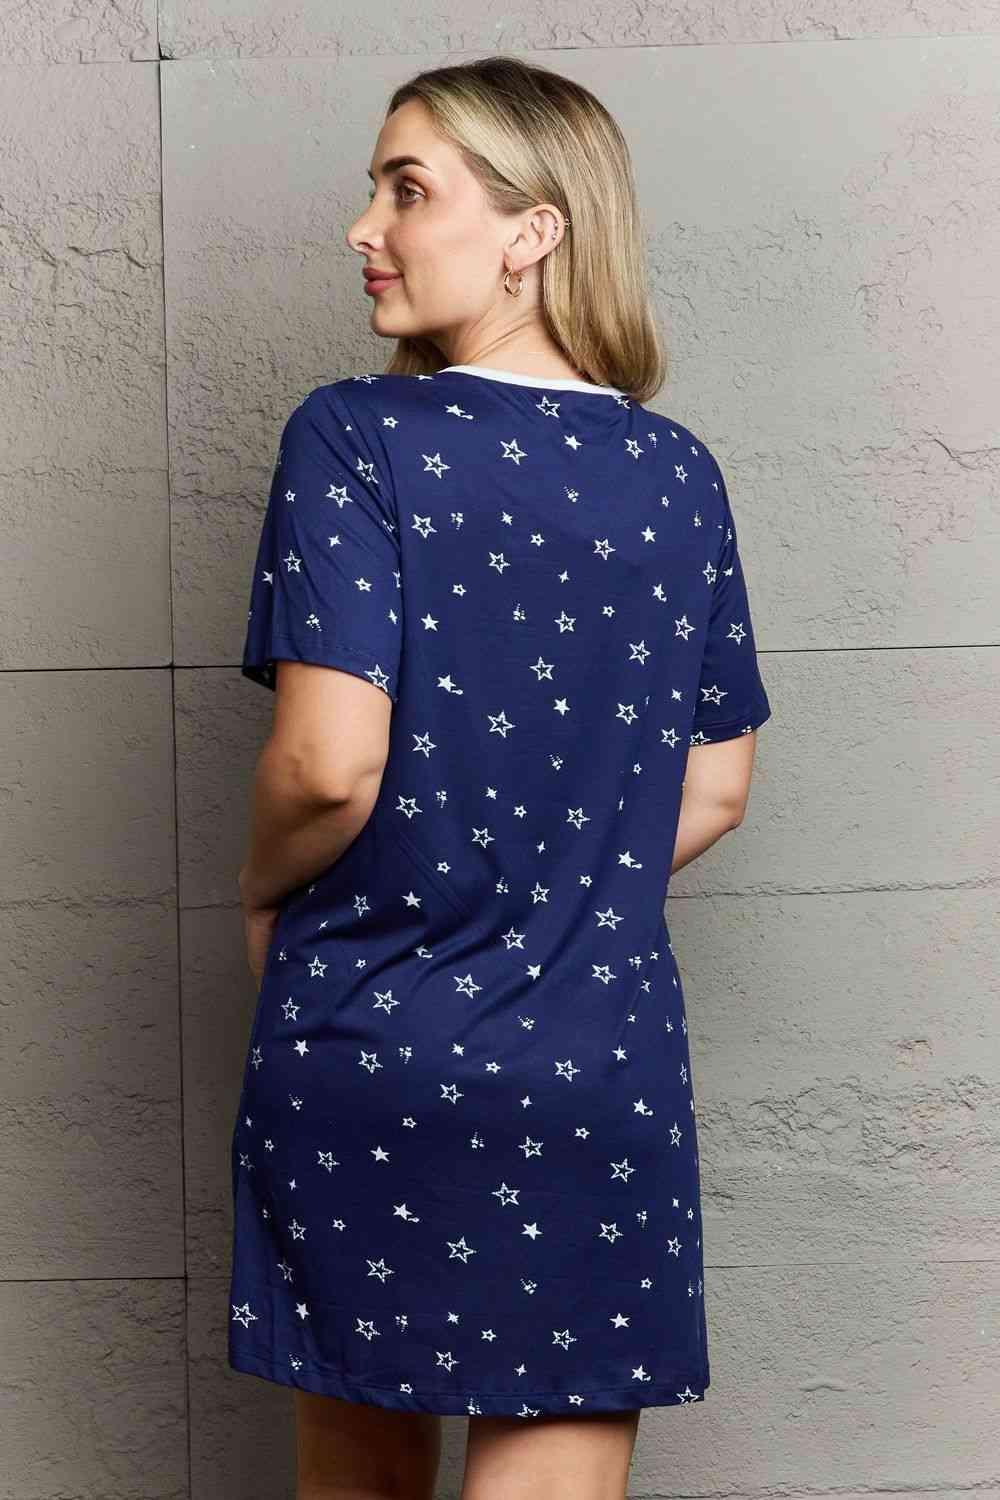 Short Sleeve Button Down Navy Blue Nightgown - MXSTUDIO.COM